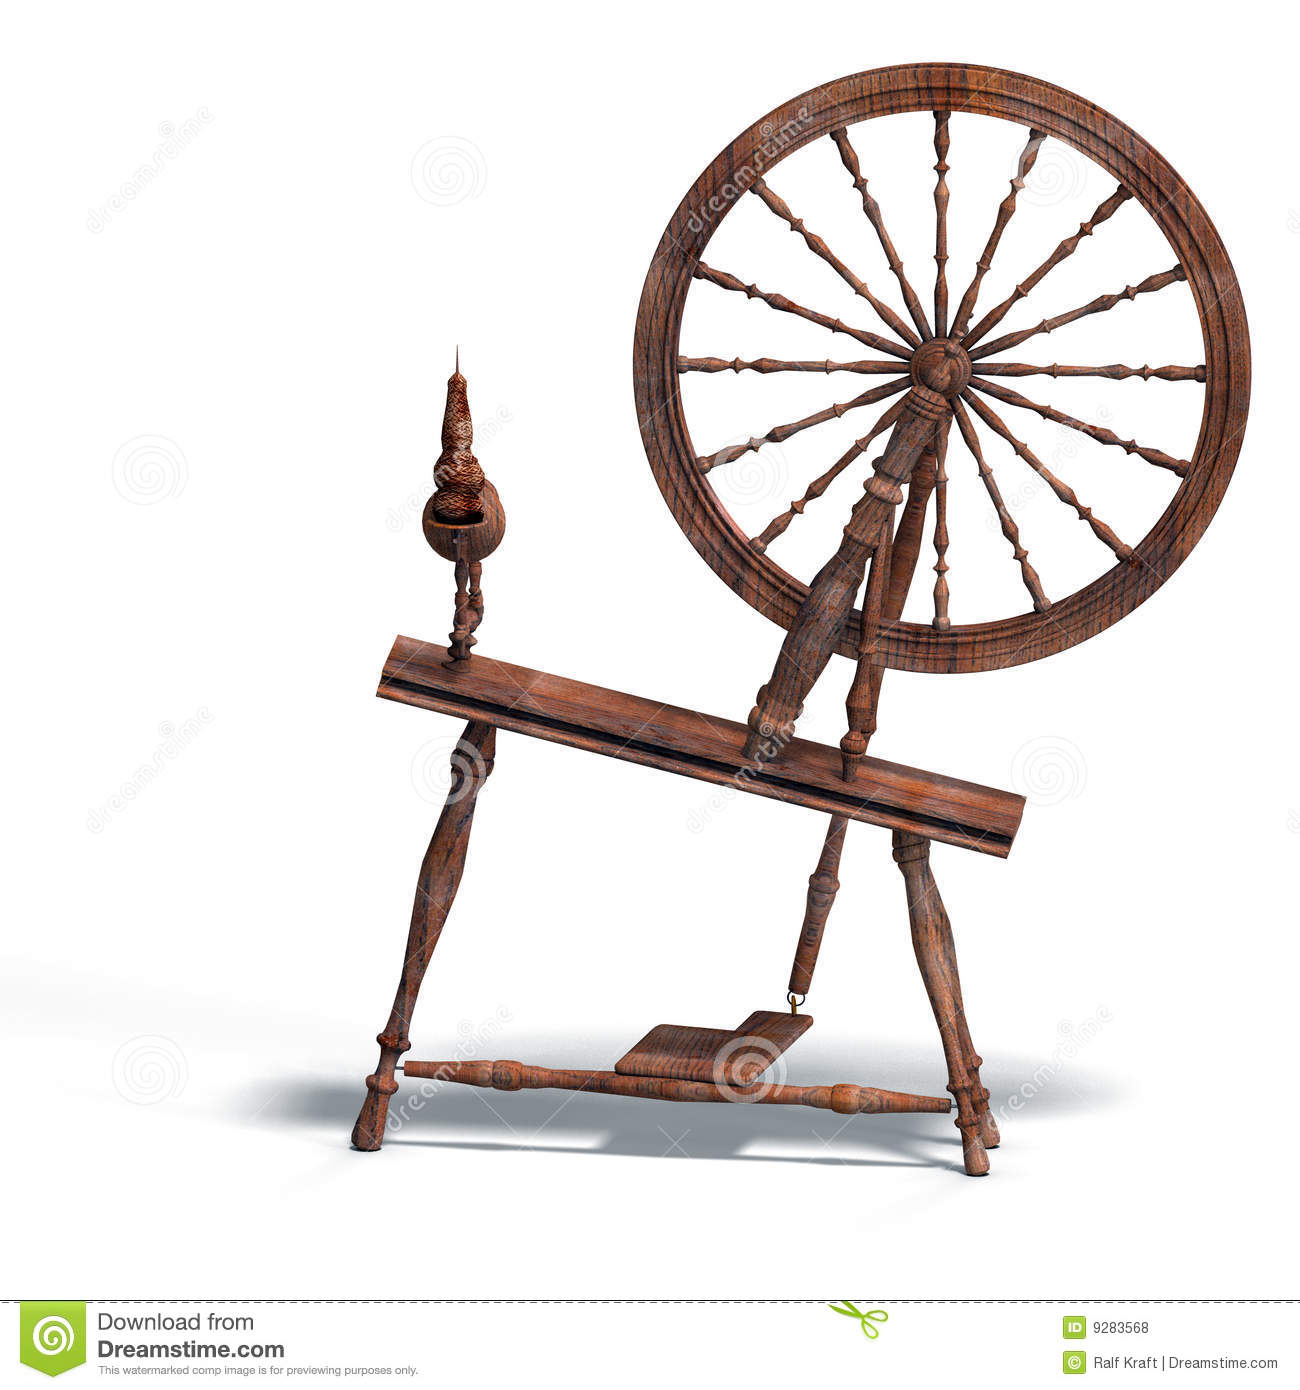 Sleeping Beauty Spinning Wheel